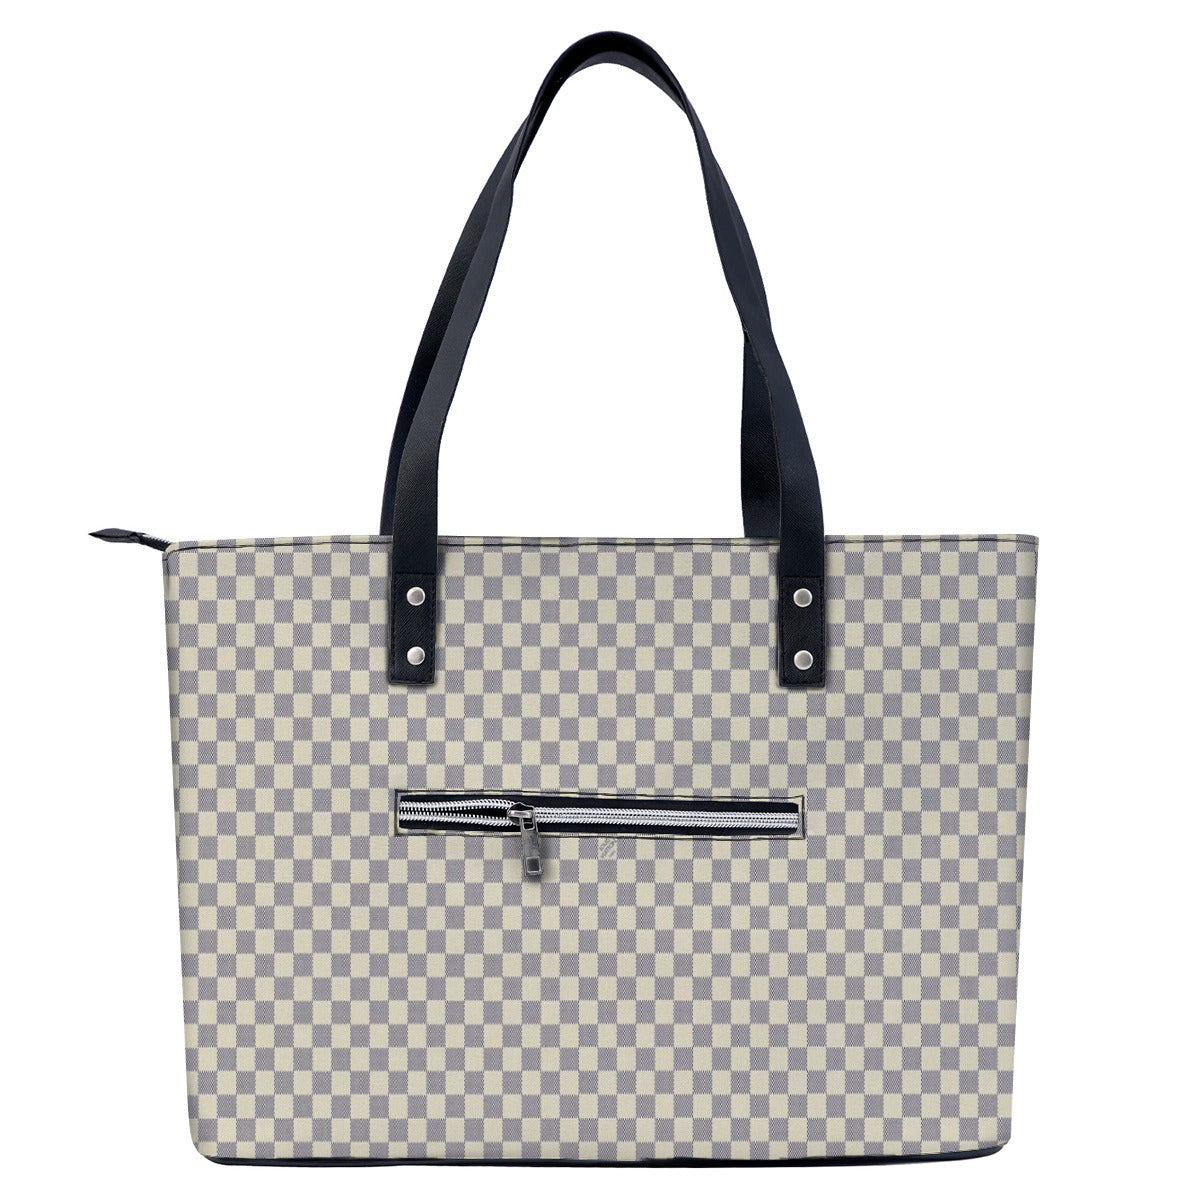 Personalized Soft Leather Tote Shoulder Bag, Big Capacity Handbag